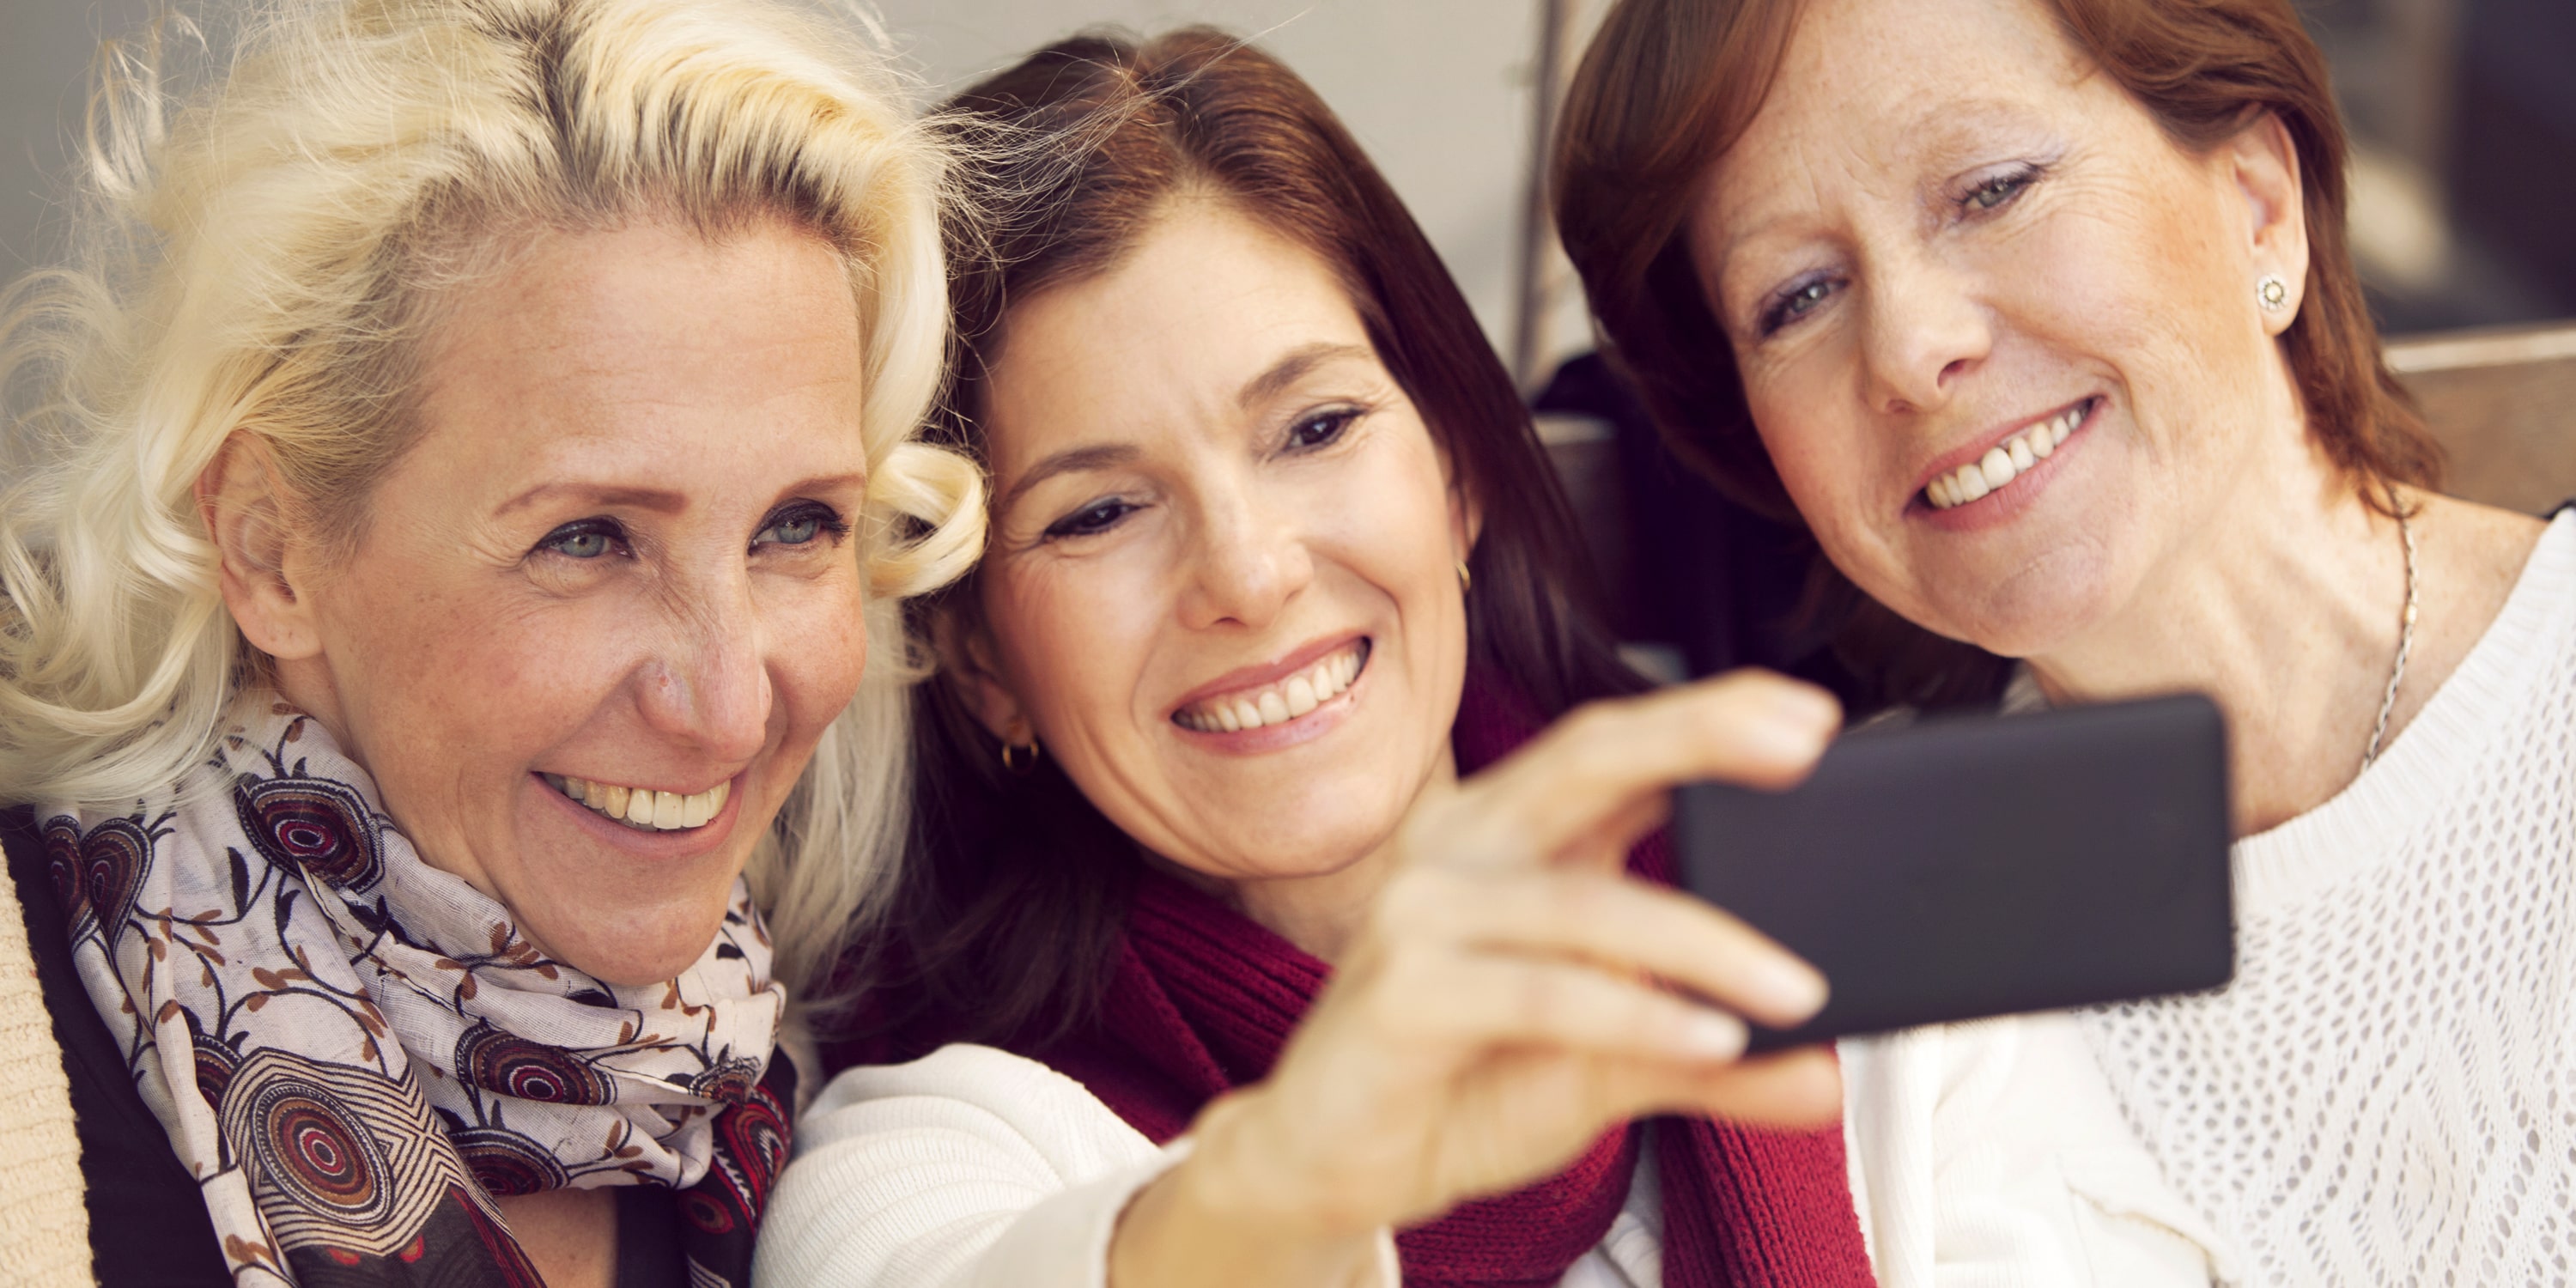 why women feature image - women taking a selfie